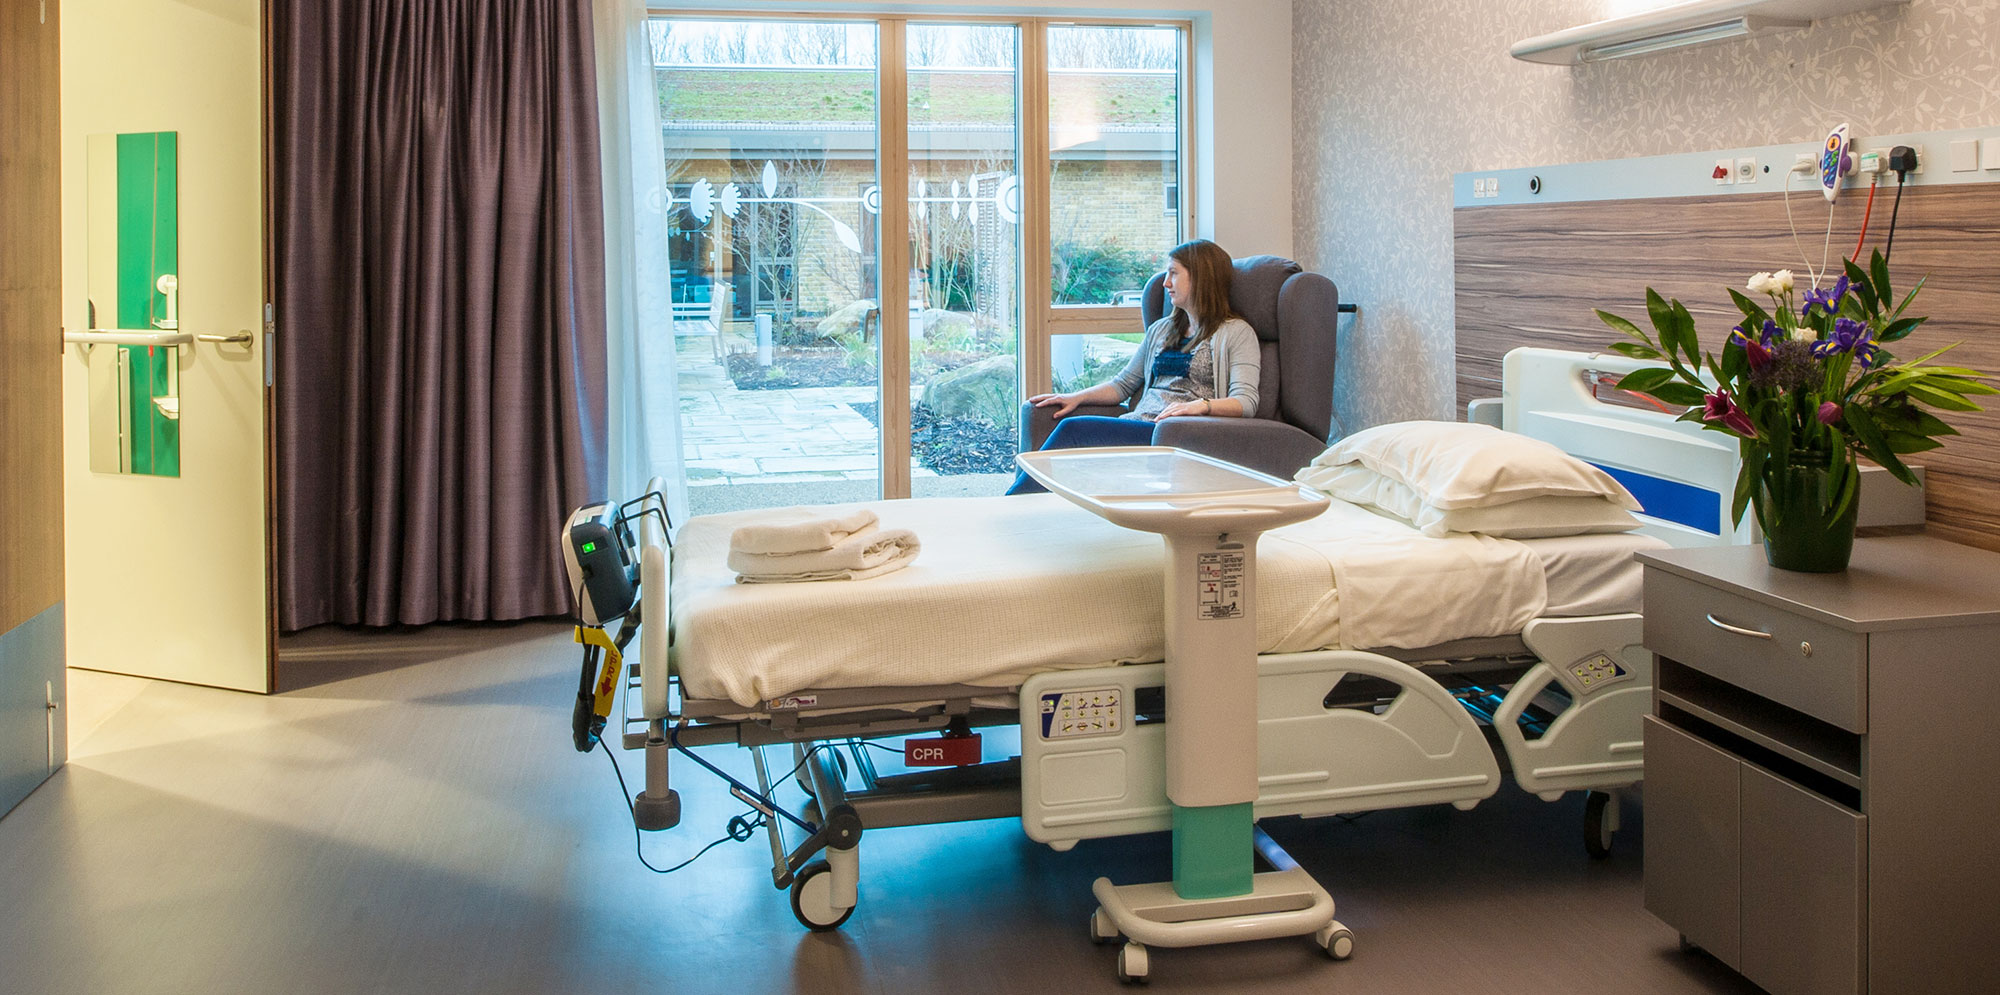 Patient bedroom inside St Wilfrids hospital